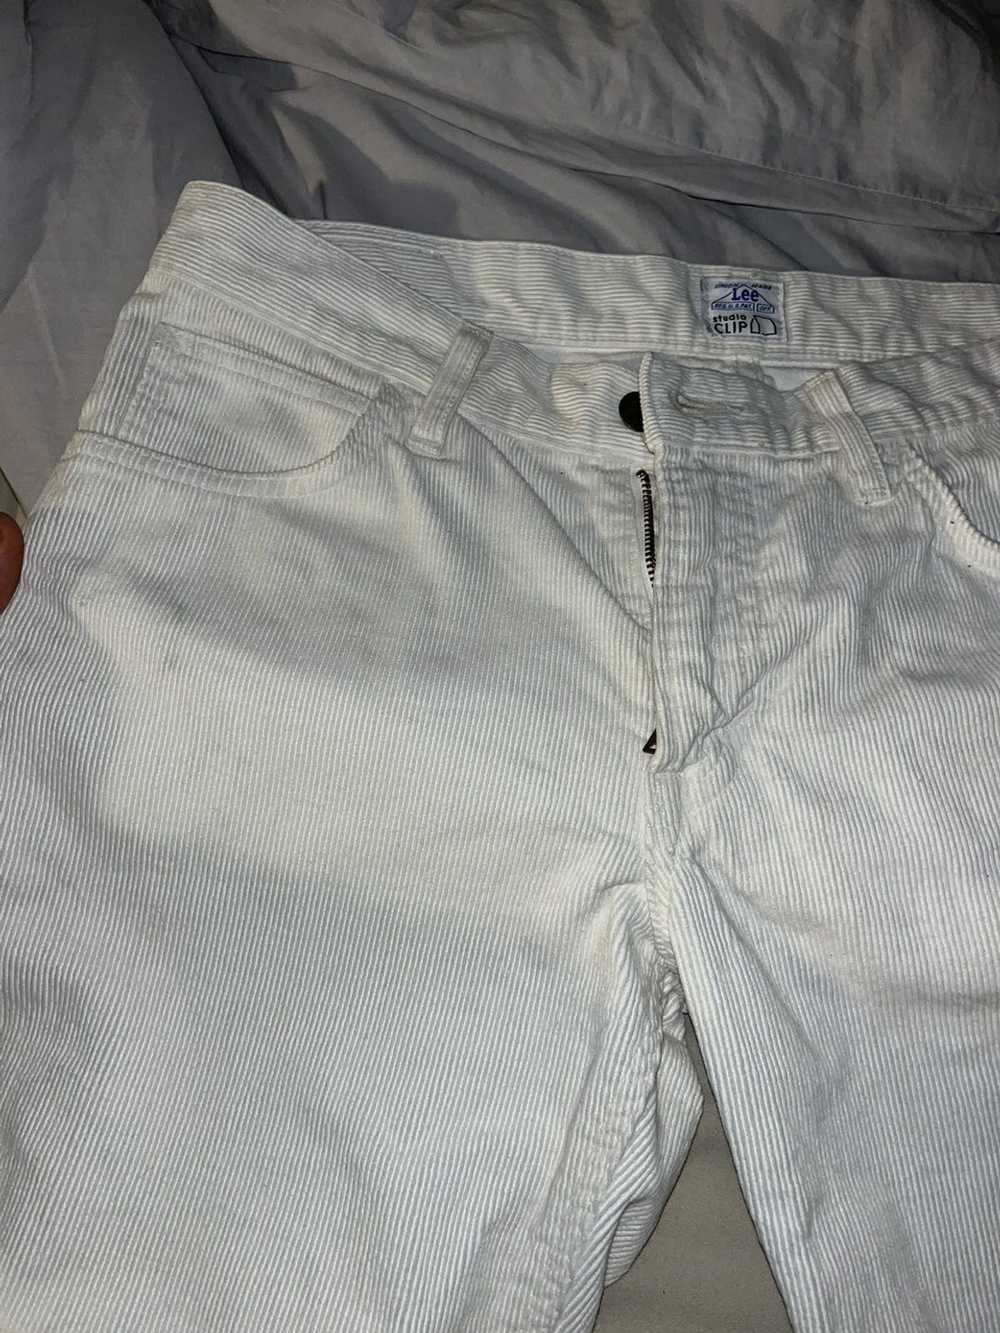 Lee Lee White Corduroy pants like-new SIZE L - image 2